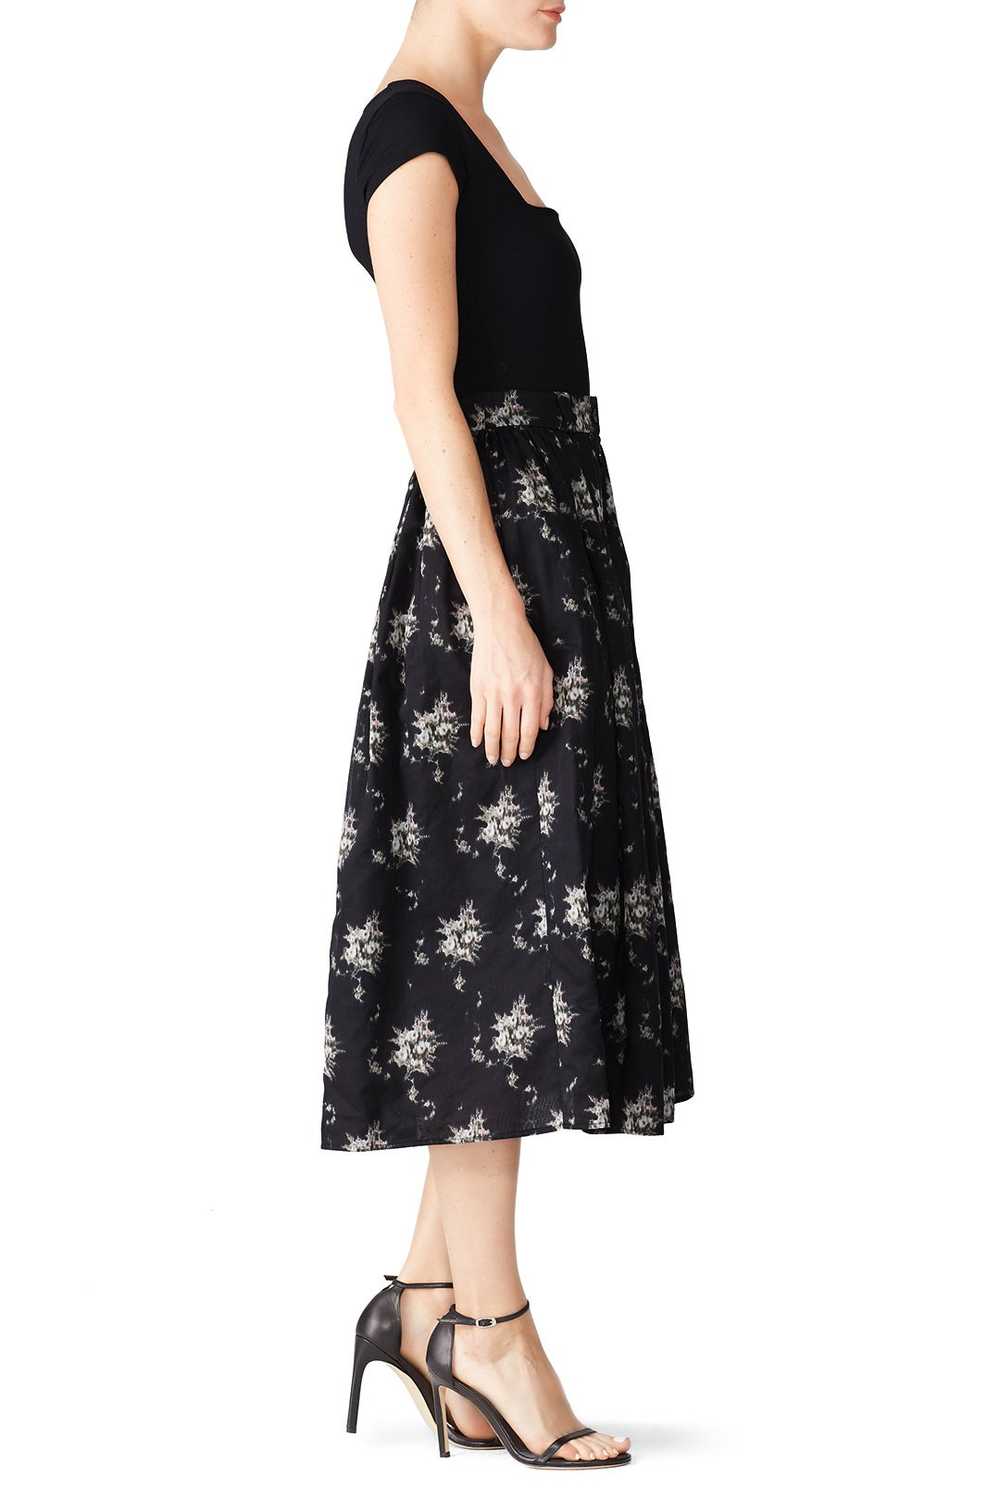 Brock Collection Olivio Floral Midi Skirt - image 3